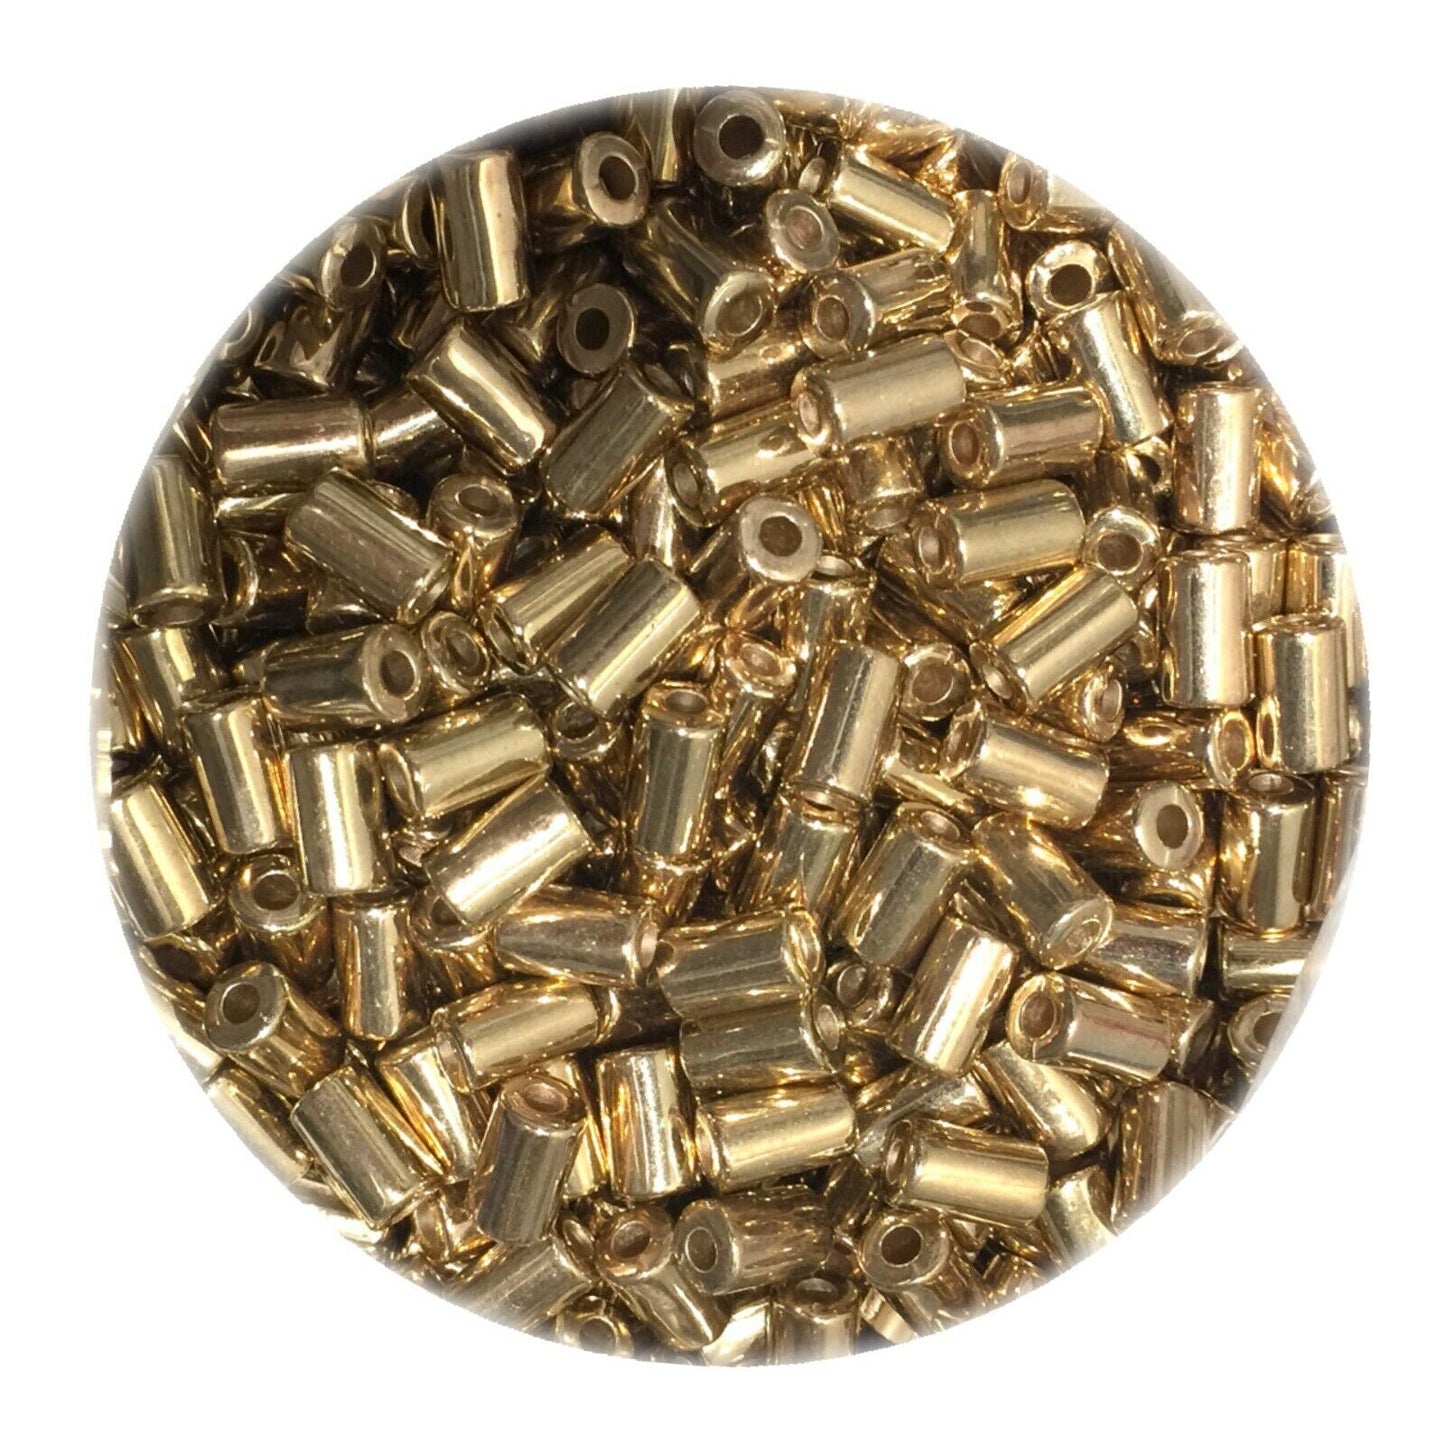 100x Golden 11mmx5mm Acrylic Tube Beads